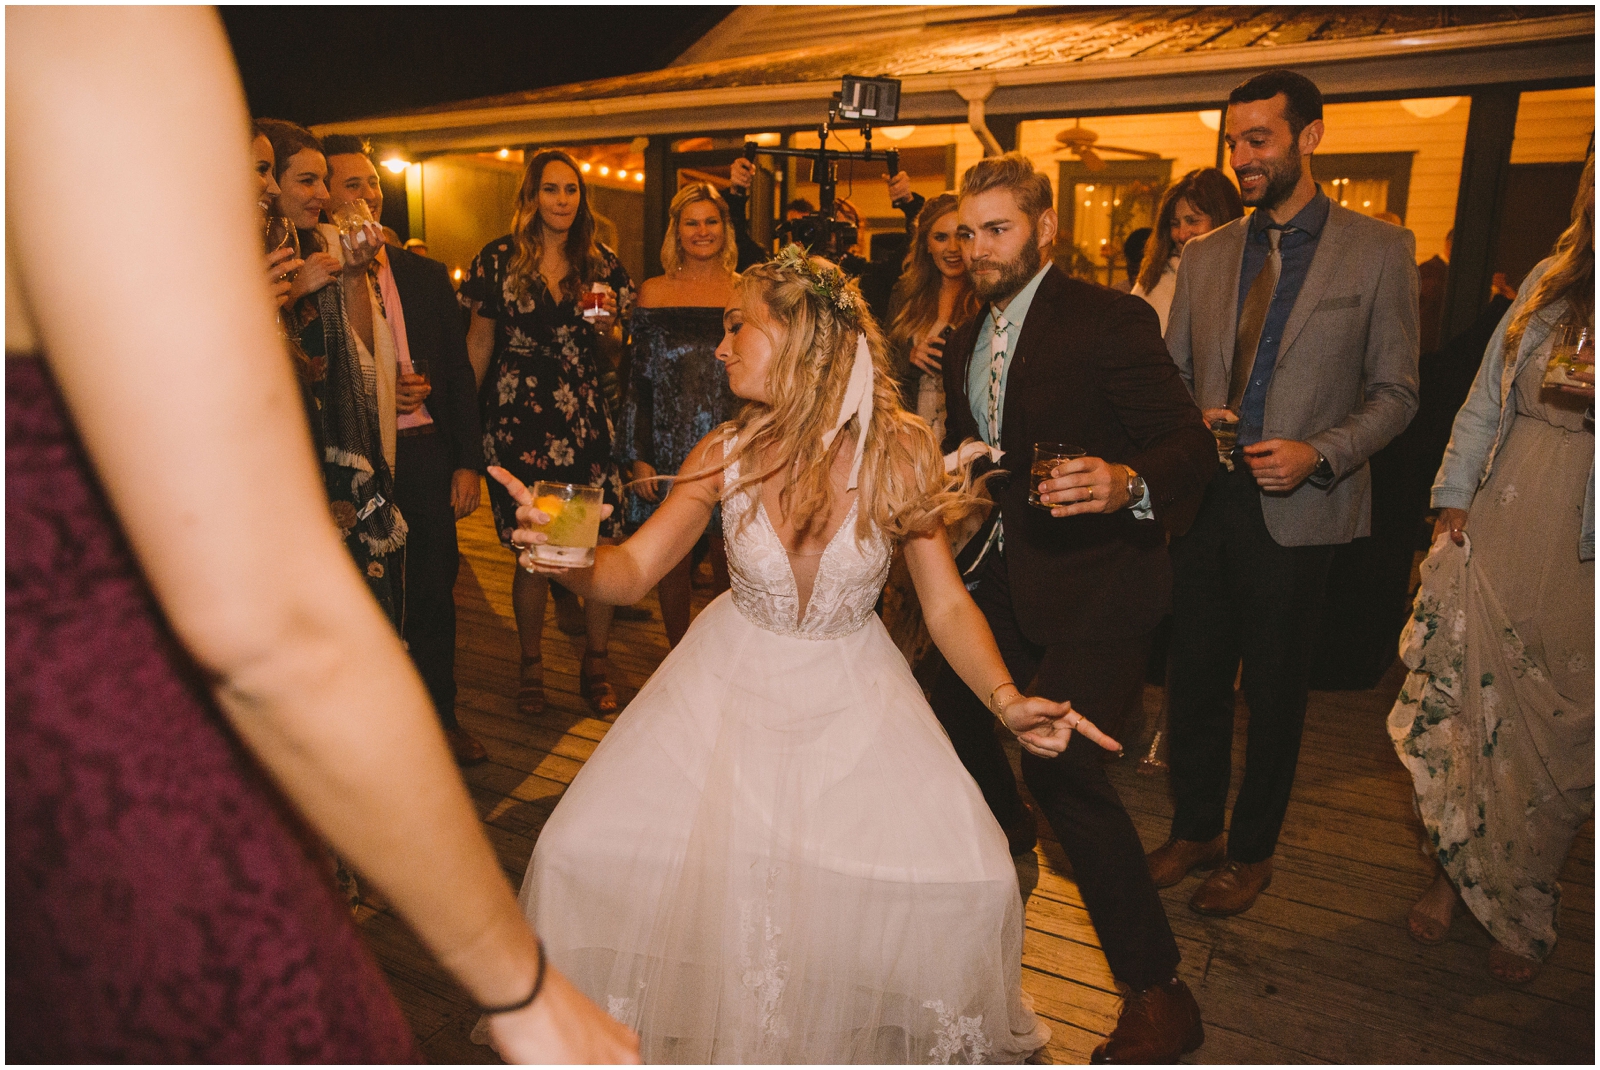  Wedding guests dancing at The Glen Venue 